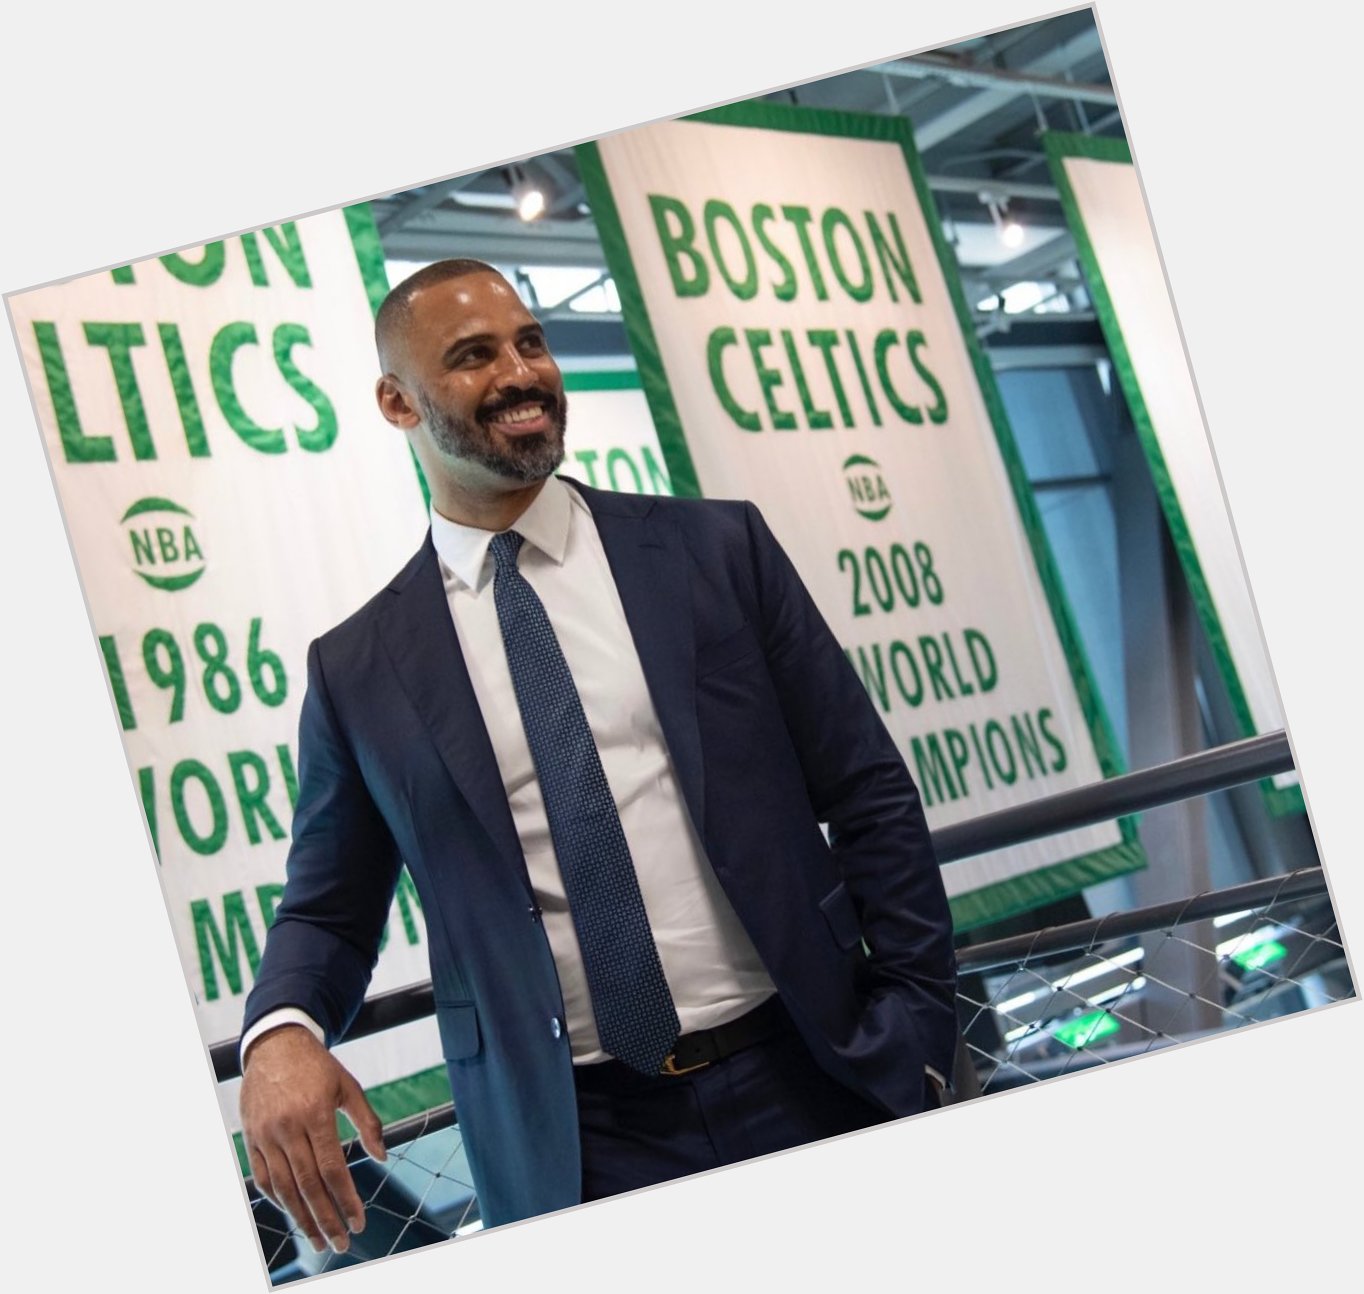 Happy Birthday Ime Udoka! The newest coach of the Boston Celtics. 